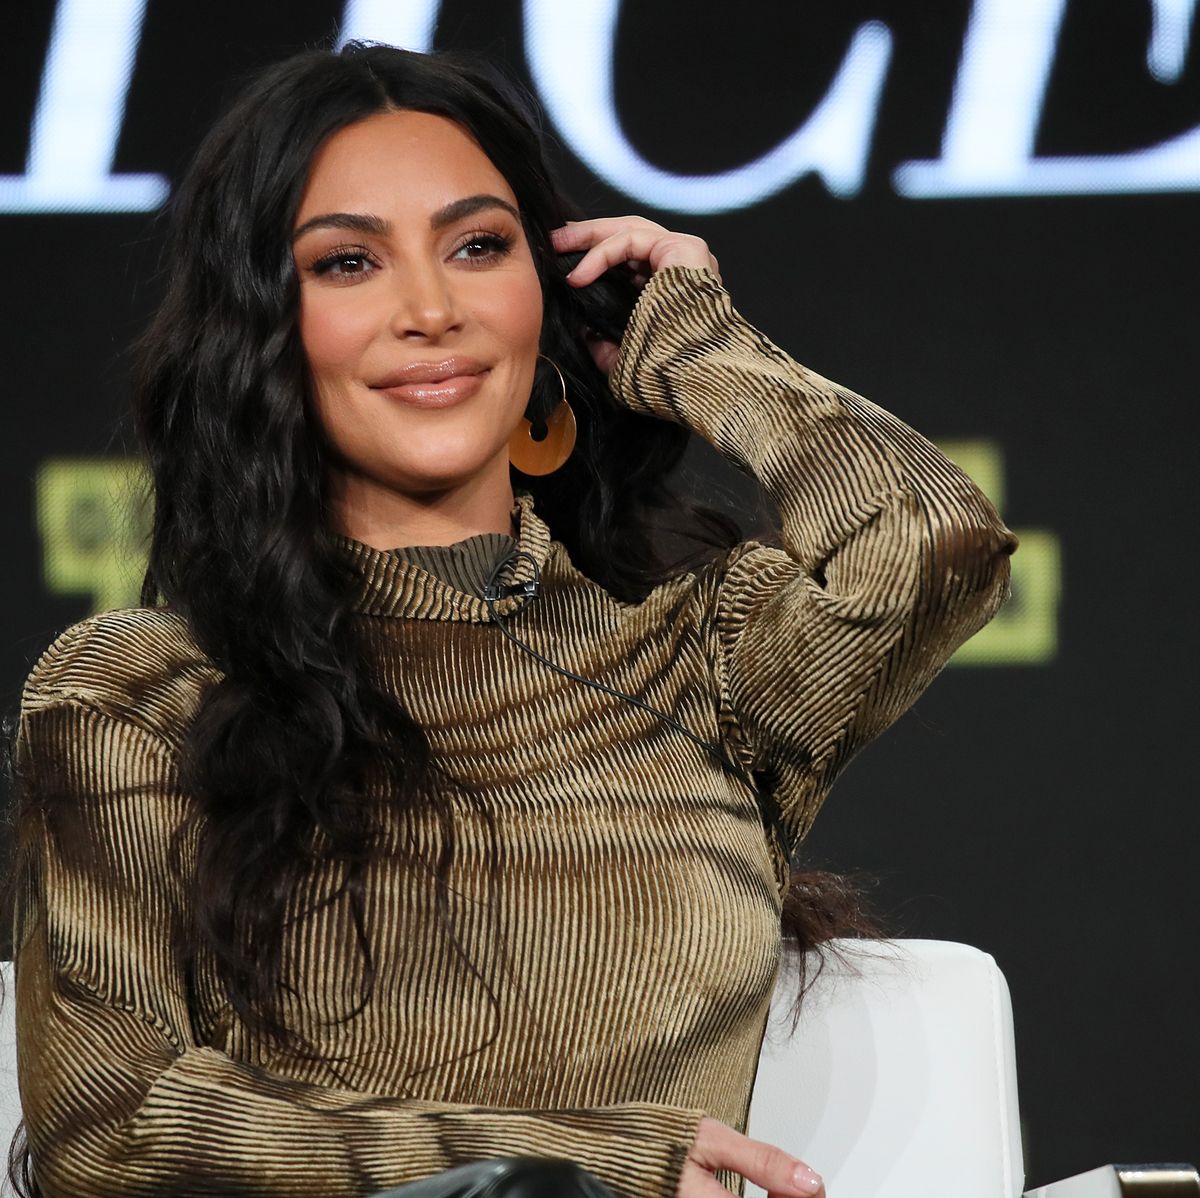 Kim Kardashian West's Beauty Brand Valued at $1 Billion in Deal